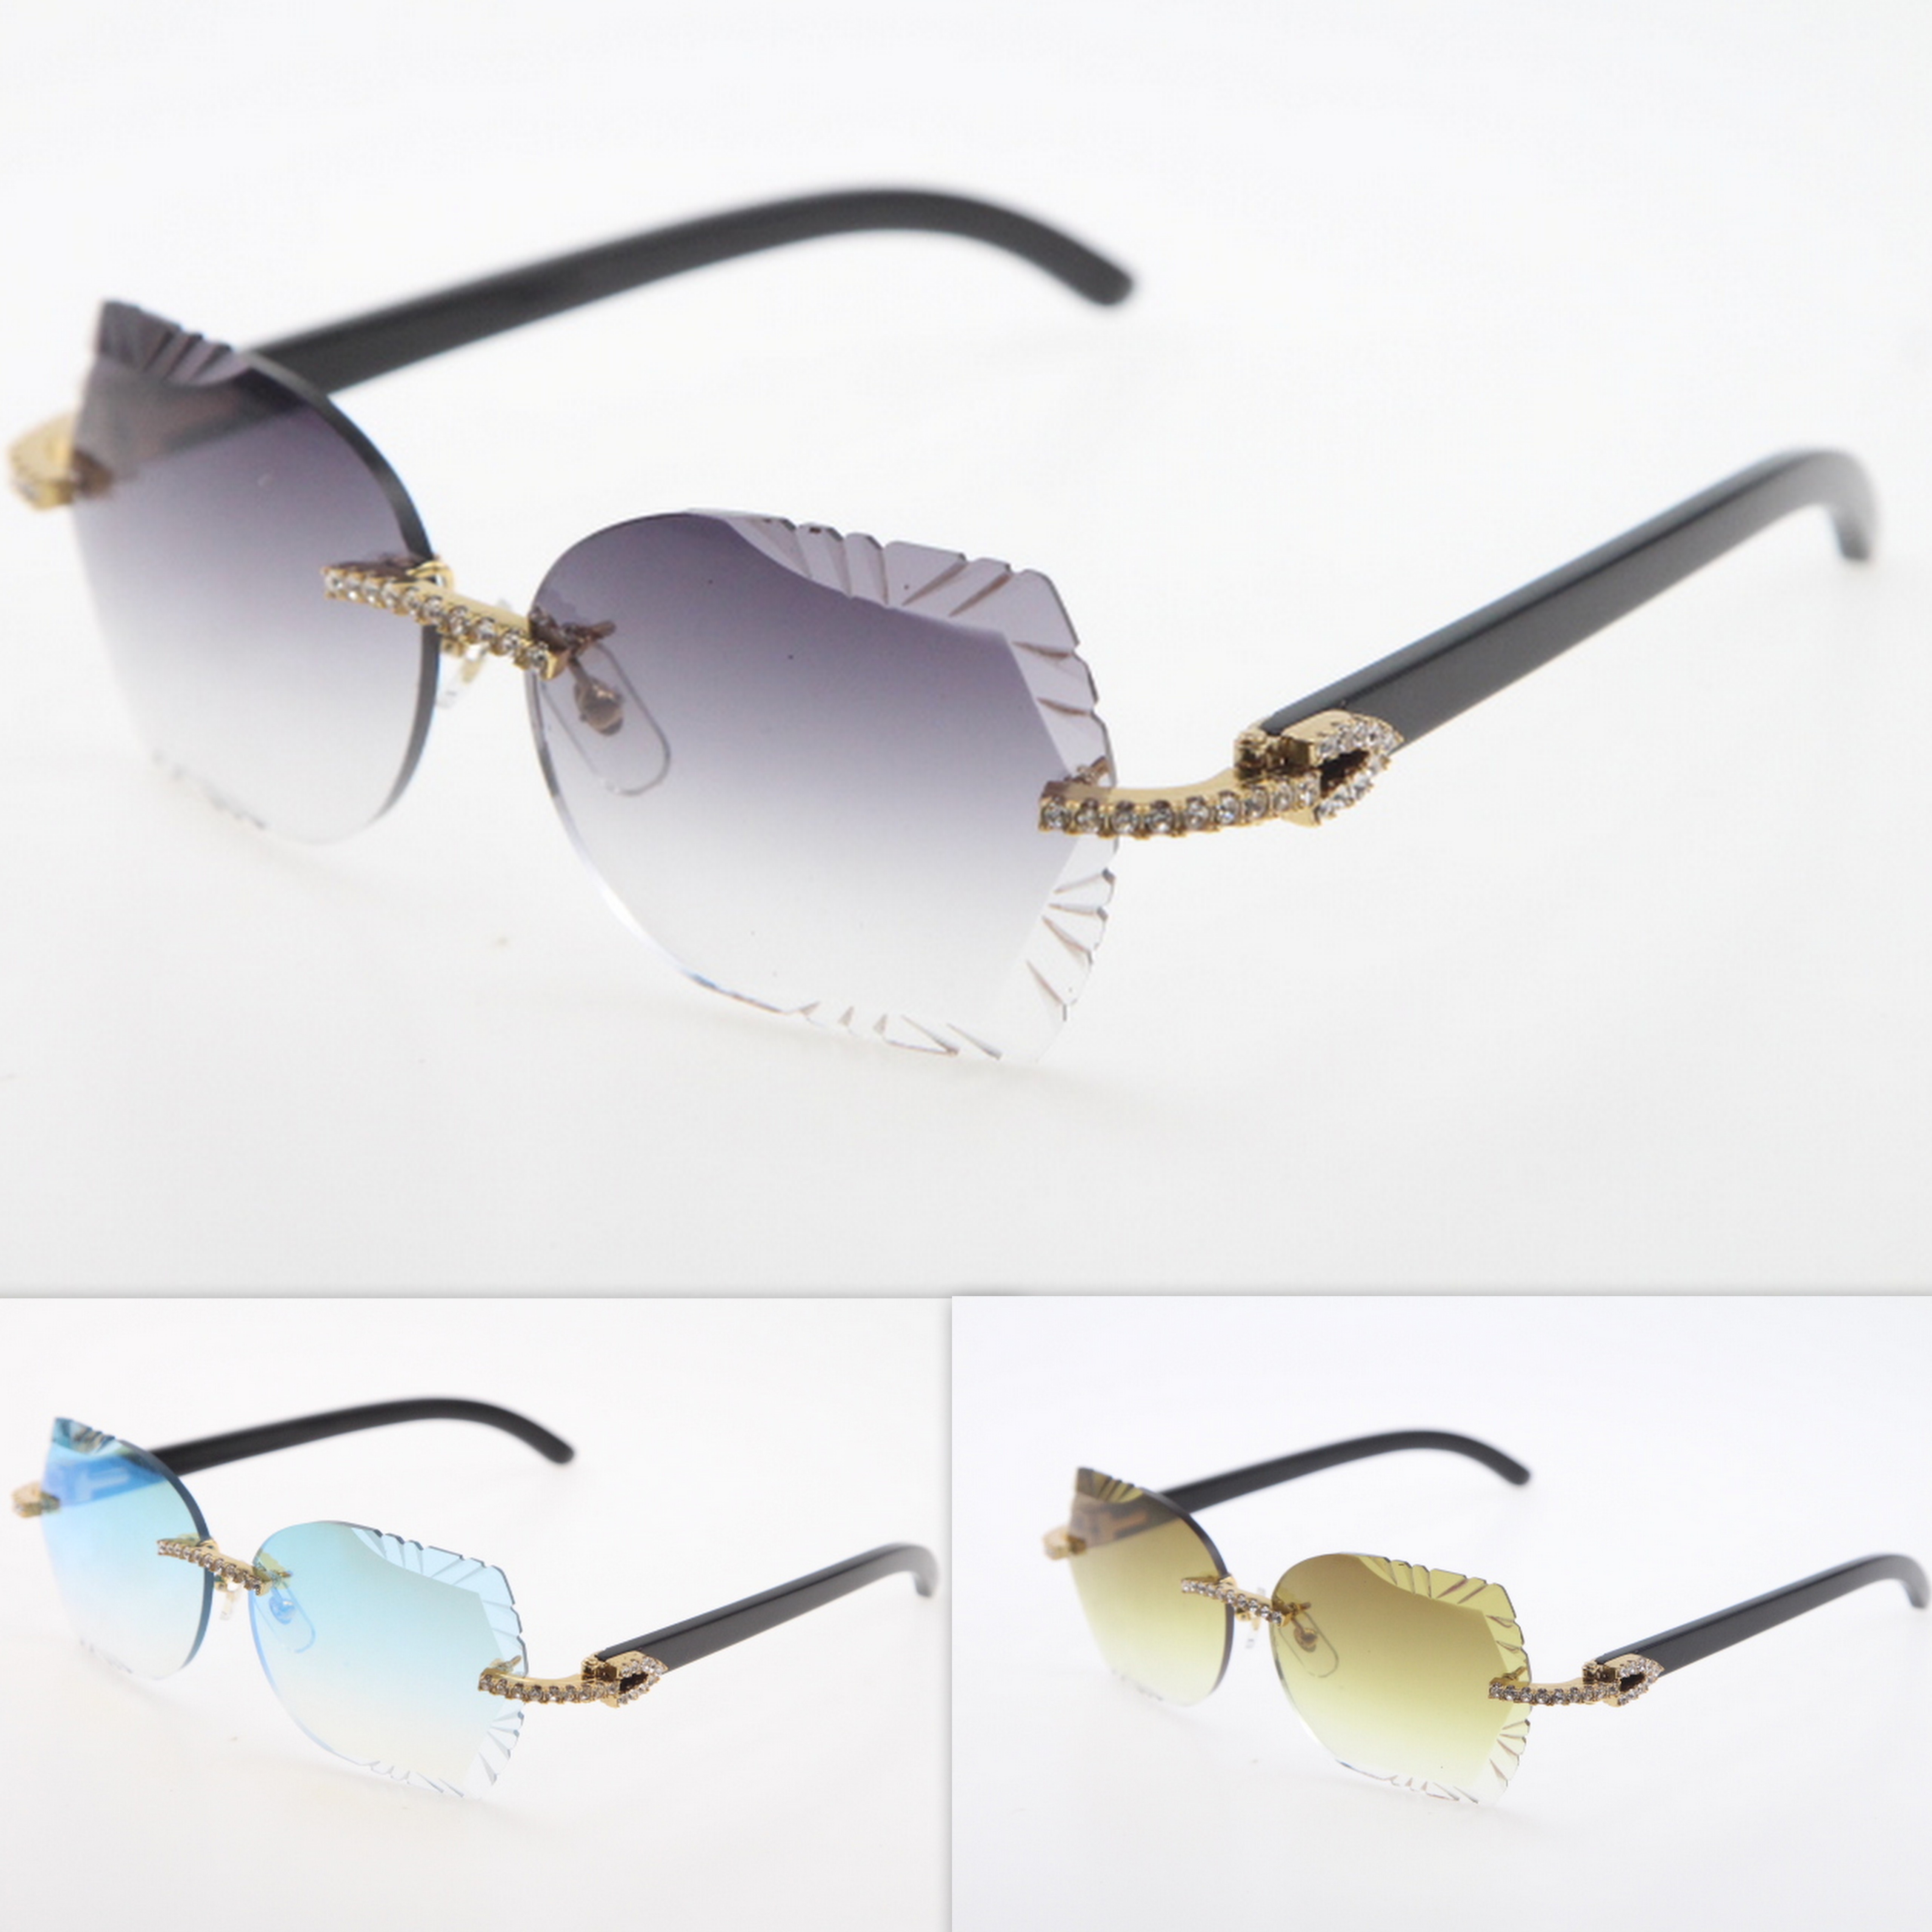 Discount Rock Sunglasses Rock Sunglasses 2020 On Sale At Dhgate Com